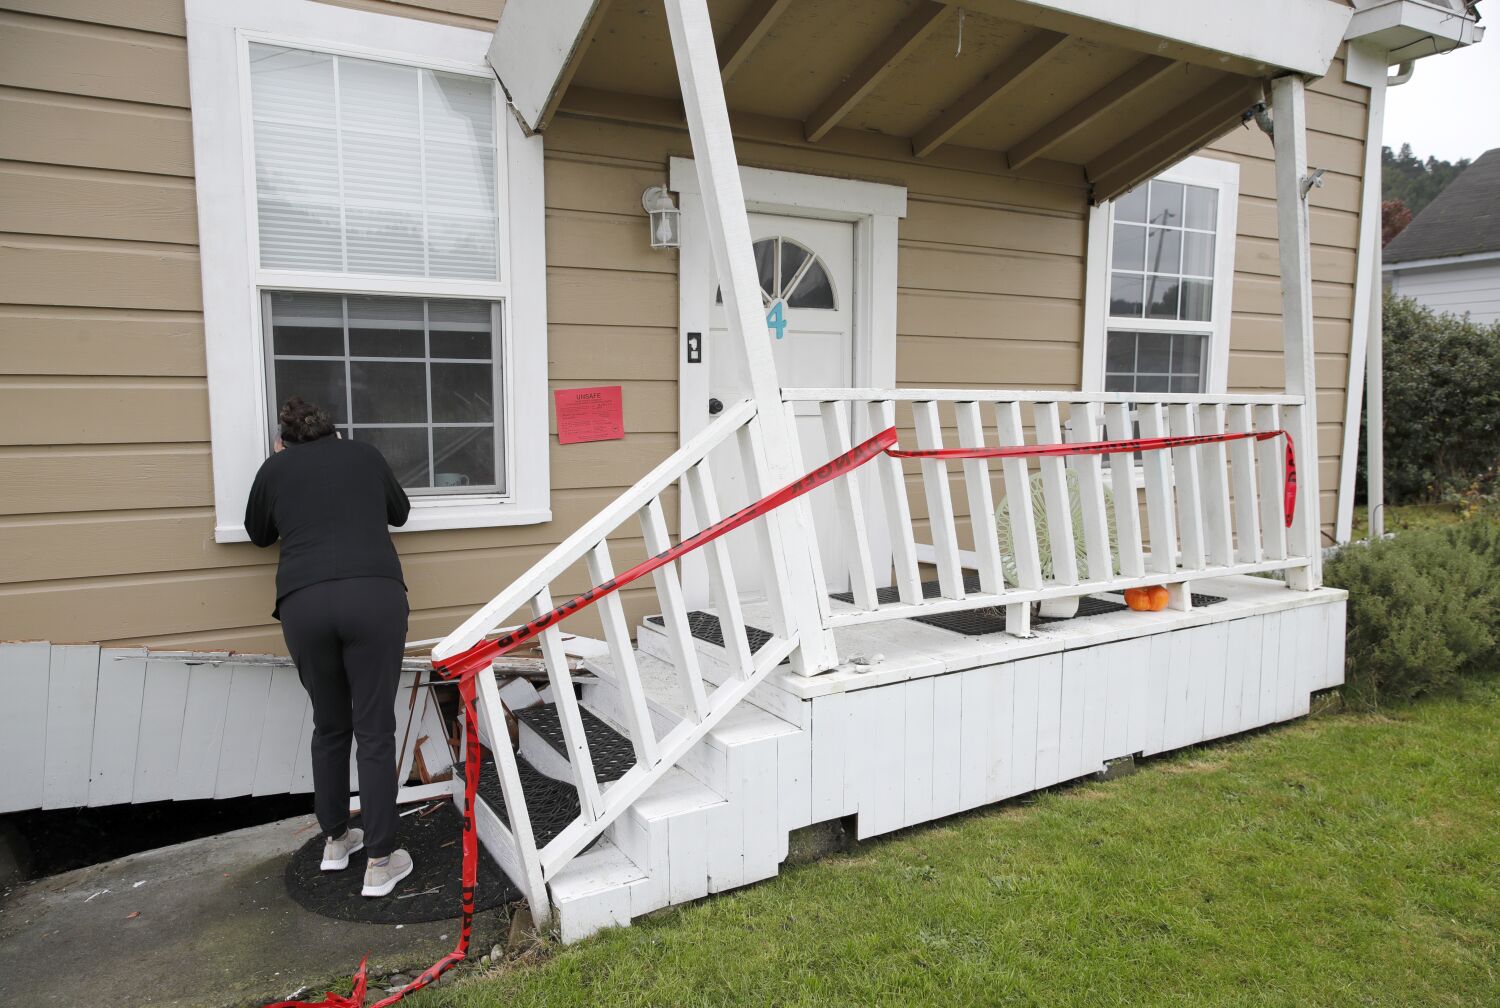 'An earthquake can drop in': More than 1 million California homes need retrofittings